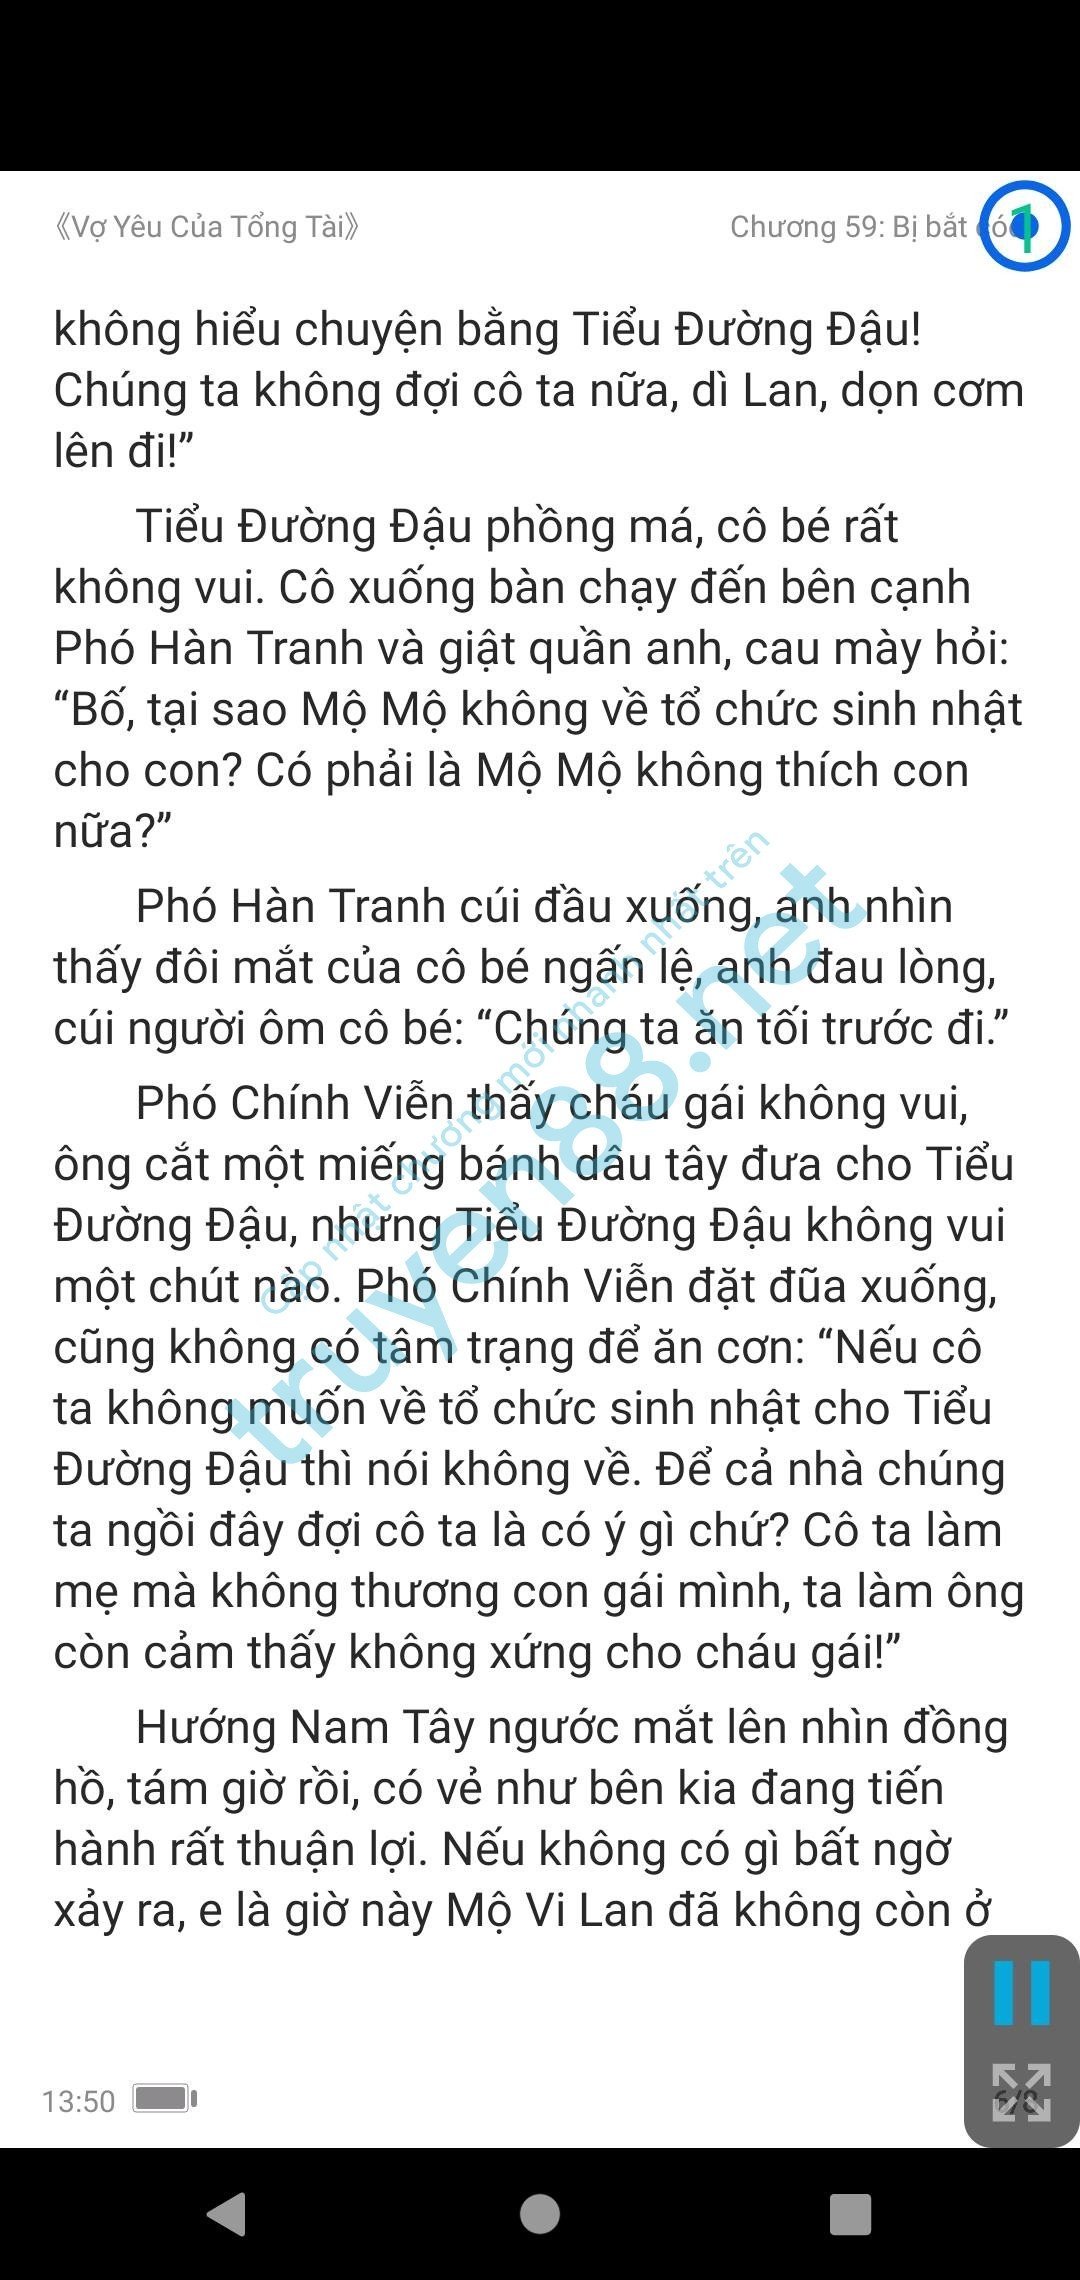 vo-yeu-cua-tong-tai-mo-vi-lan--pho-han-tranh-59-0